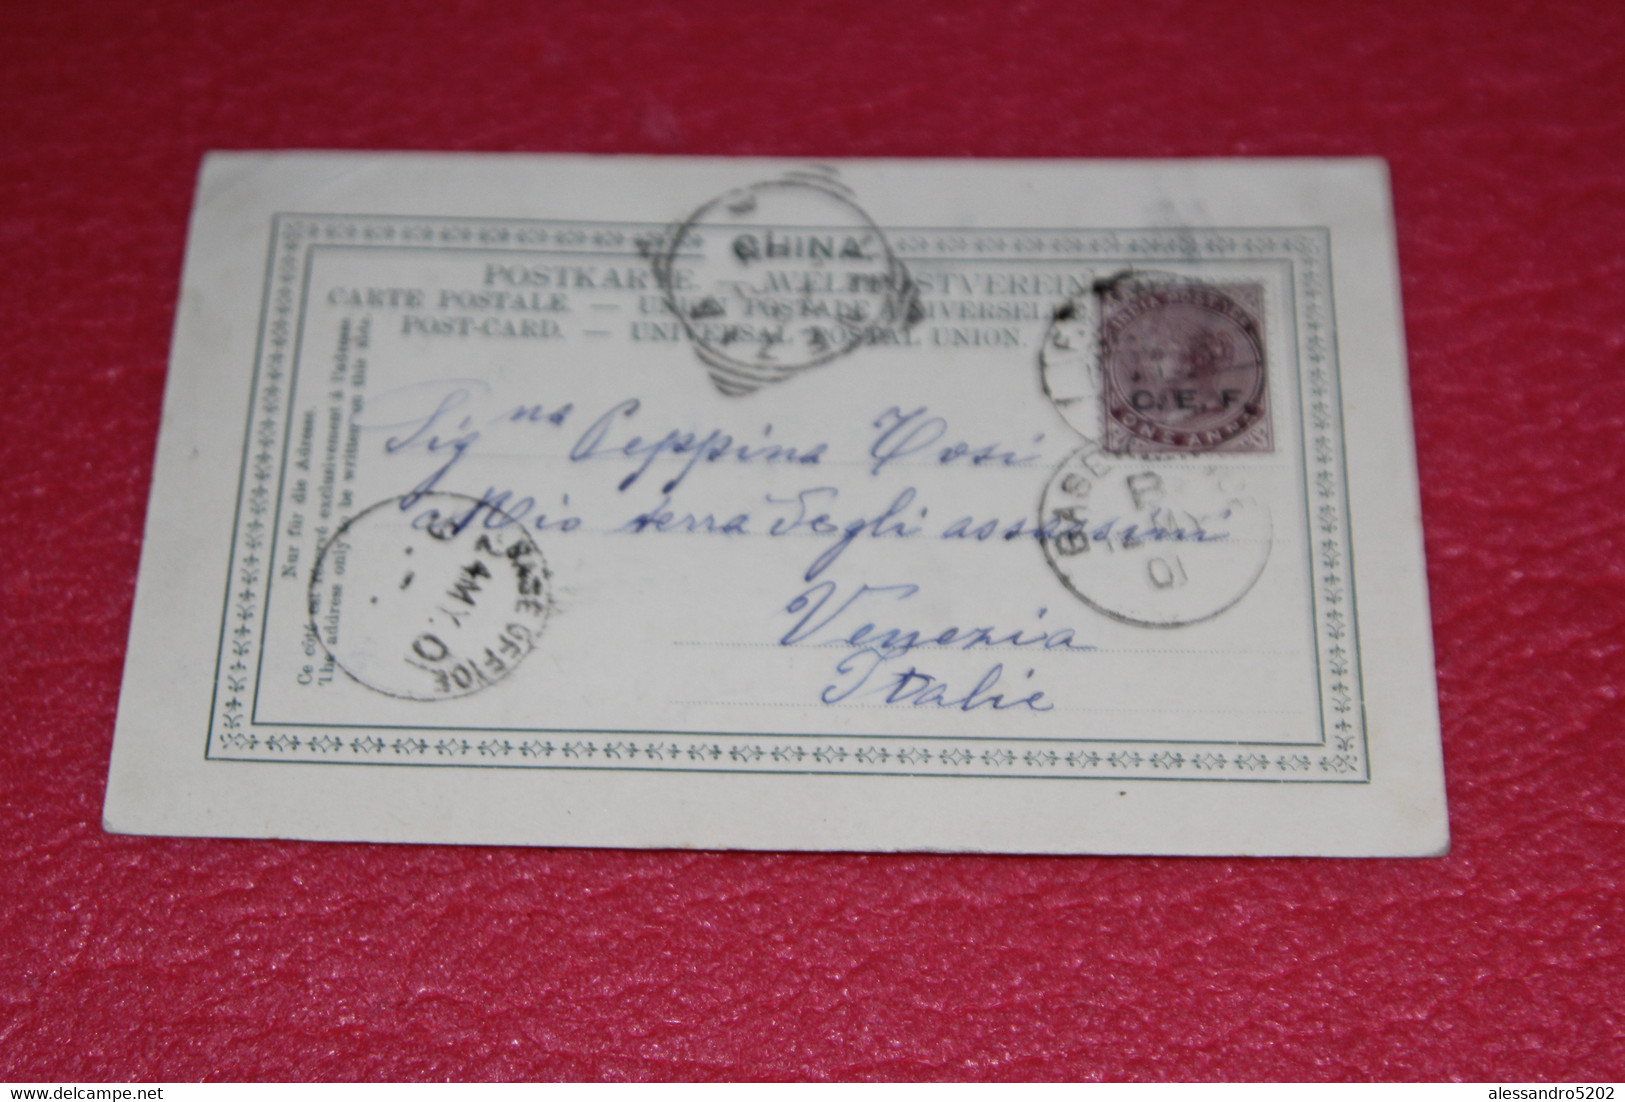 China Chine Peking Pekin North Gate 1901 + India Stamp With Cancel C.E.F. Rare++++++++ - China